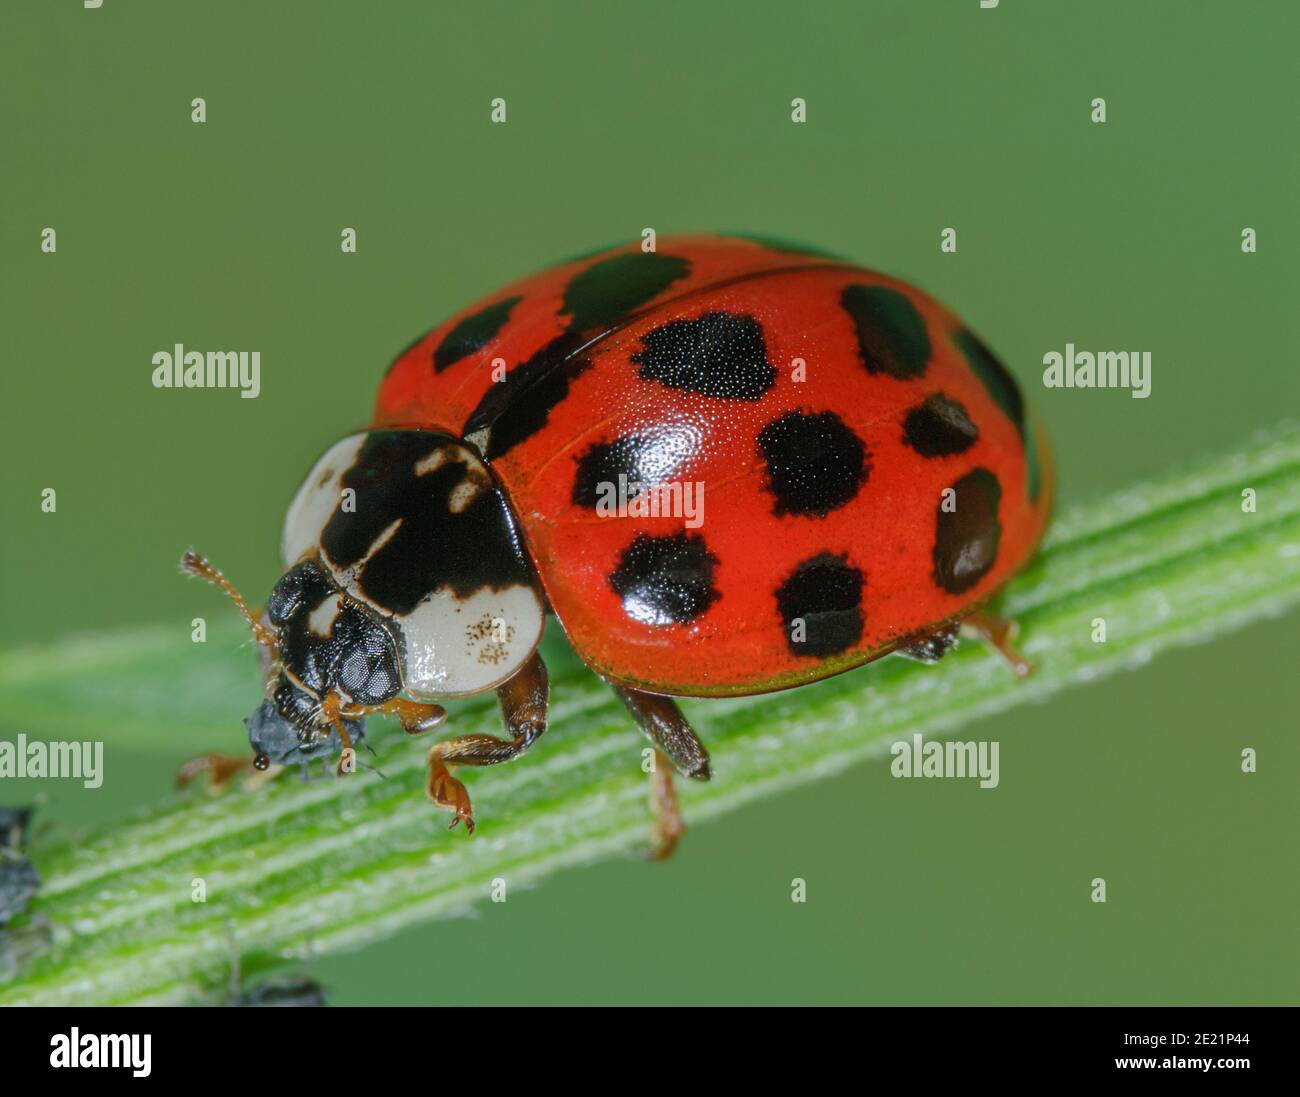 Il ladybird asiatico mangia afide Foto Stock